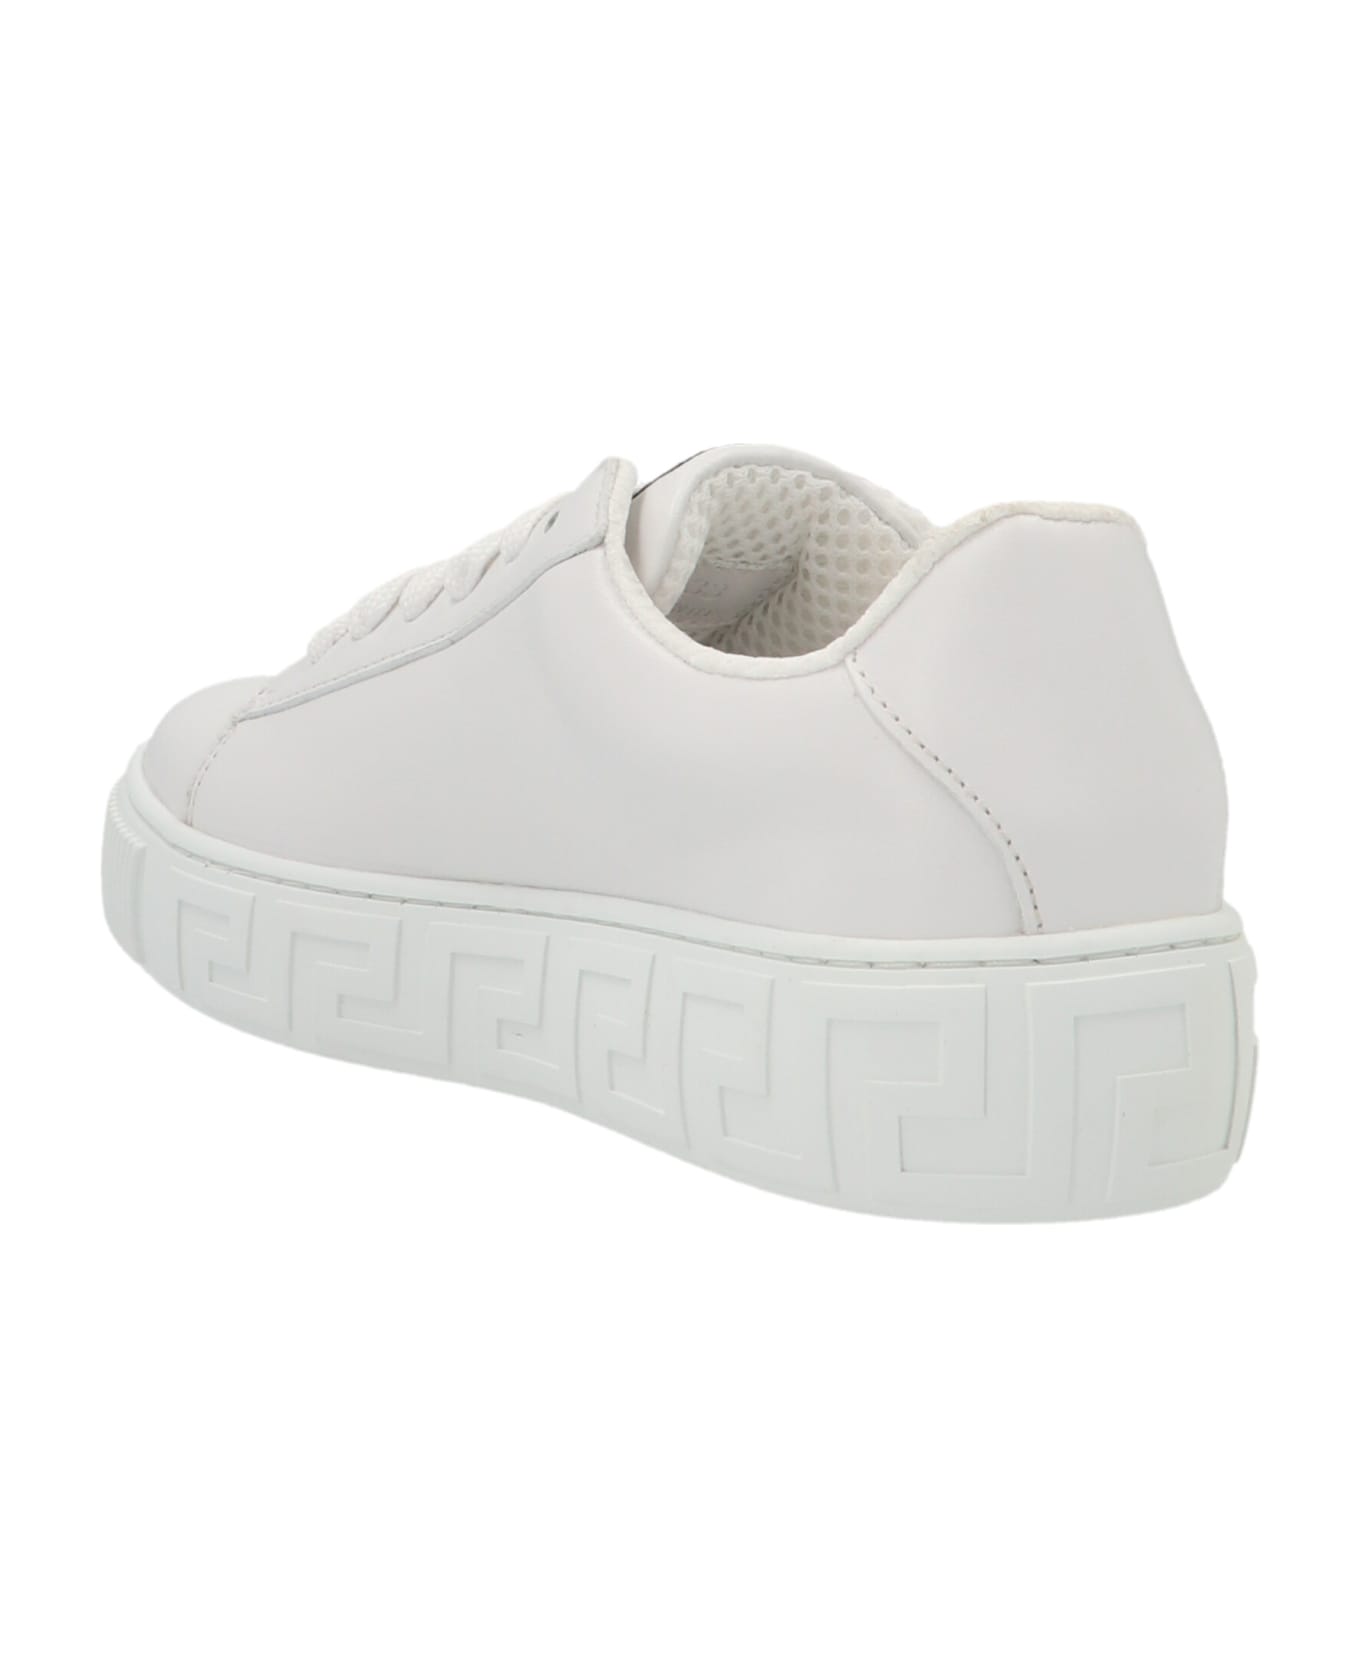 Versace 'la Greca' Sneakers - White